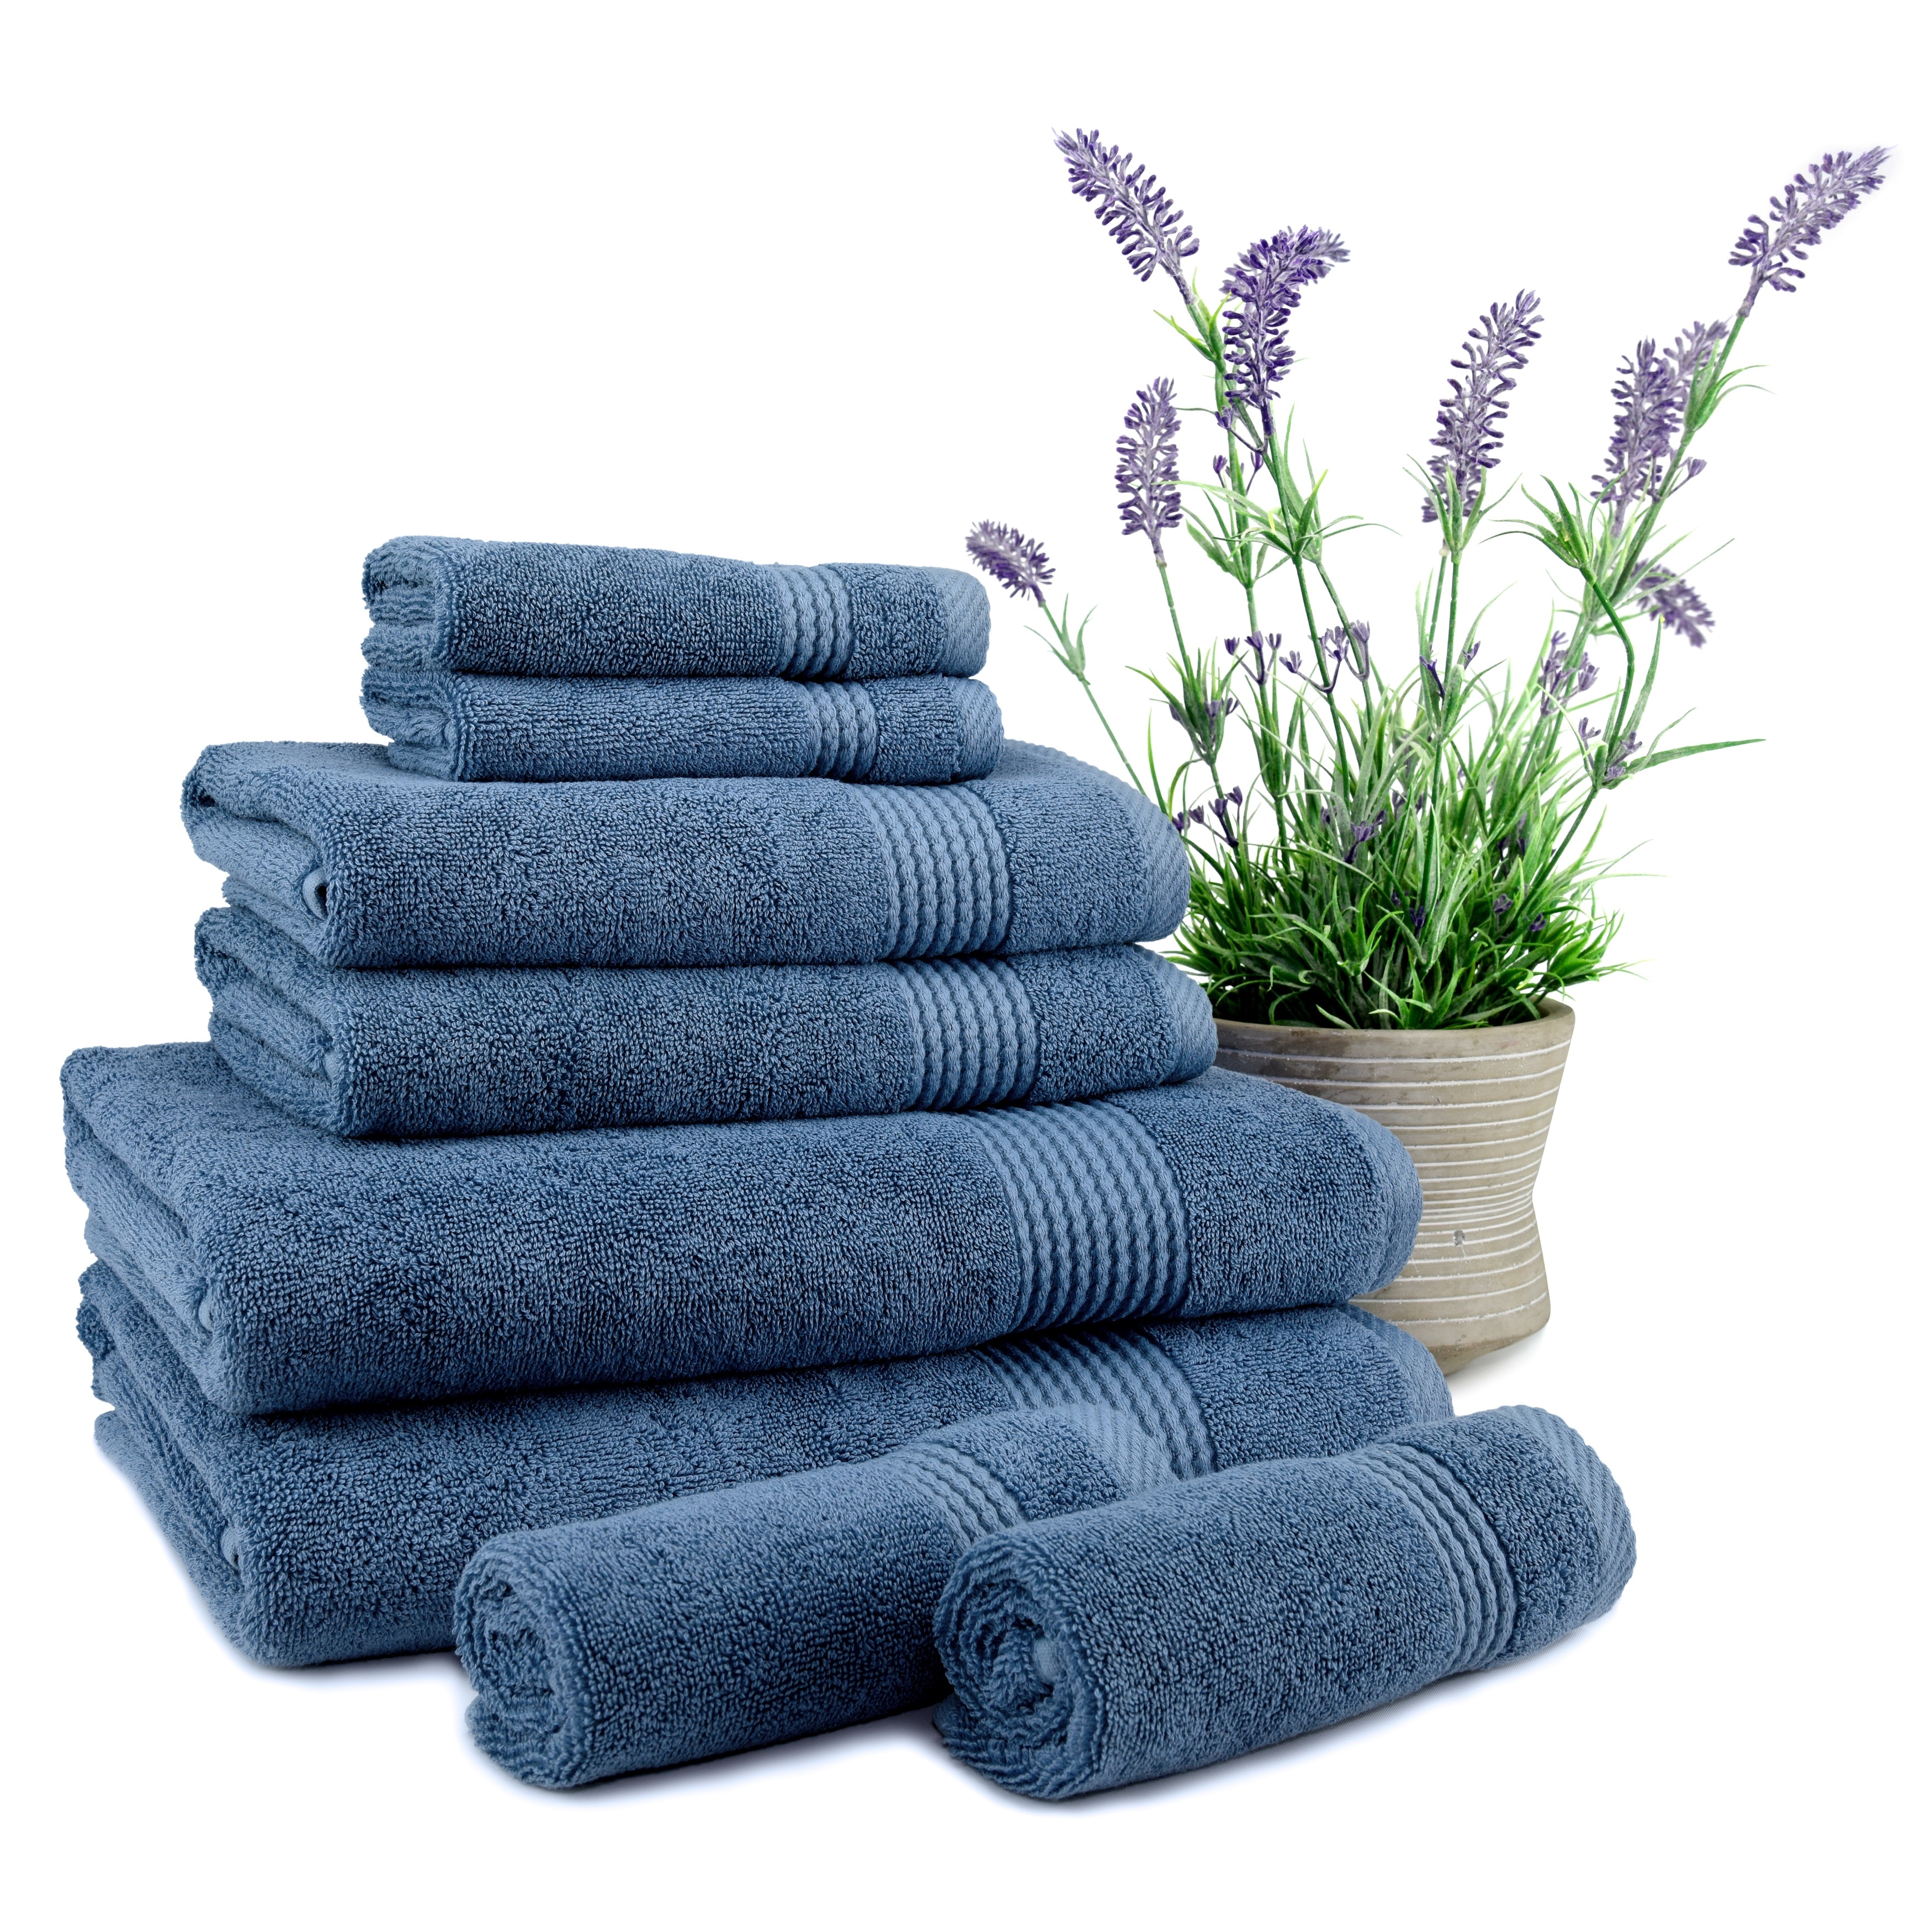 Simply Vera Wang Teal 5 Pc. Turkish Cotton Towel Set With Matching Plush Rug